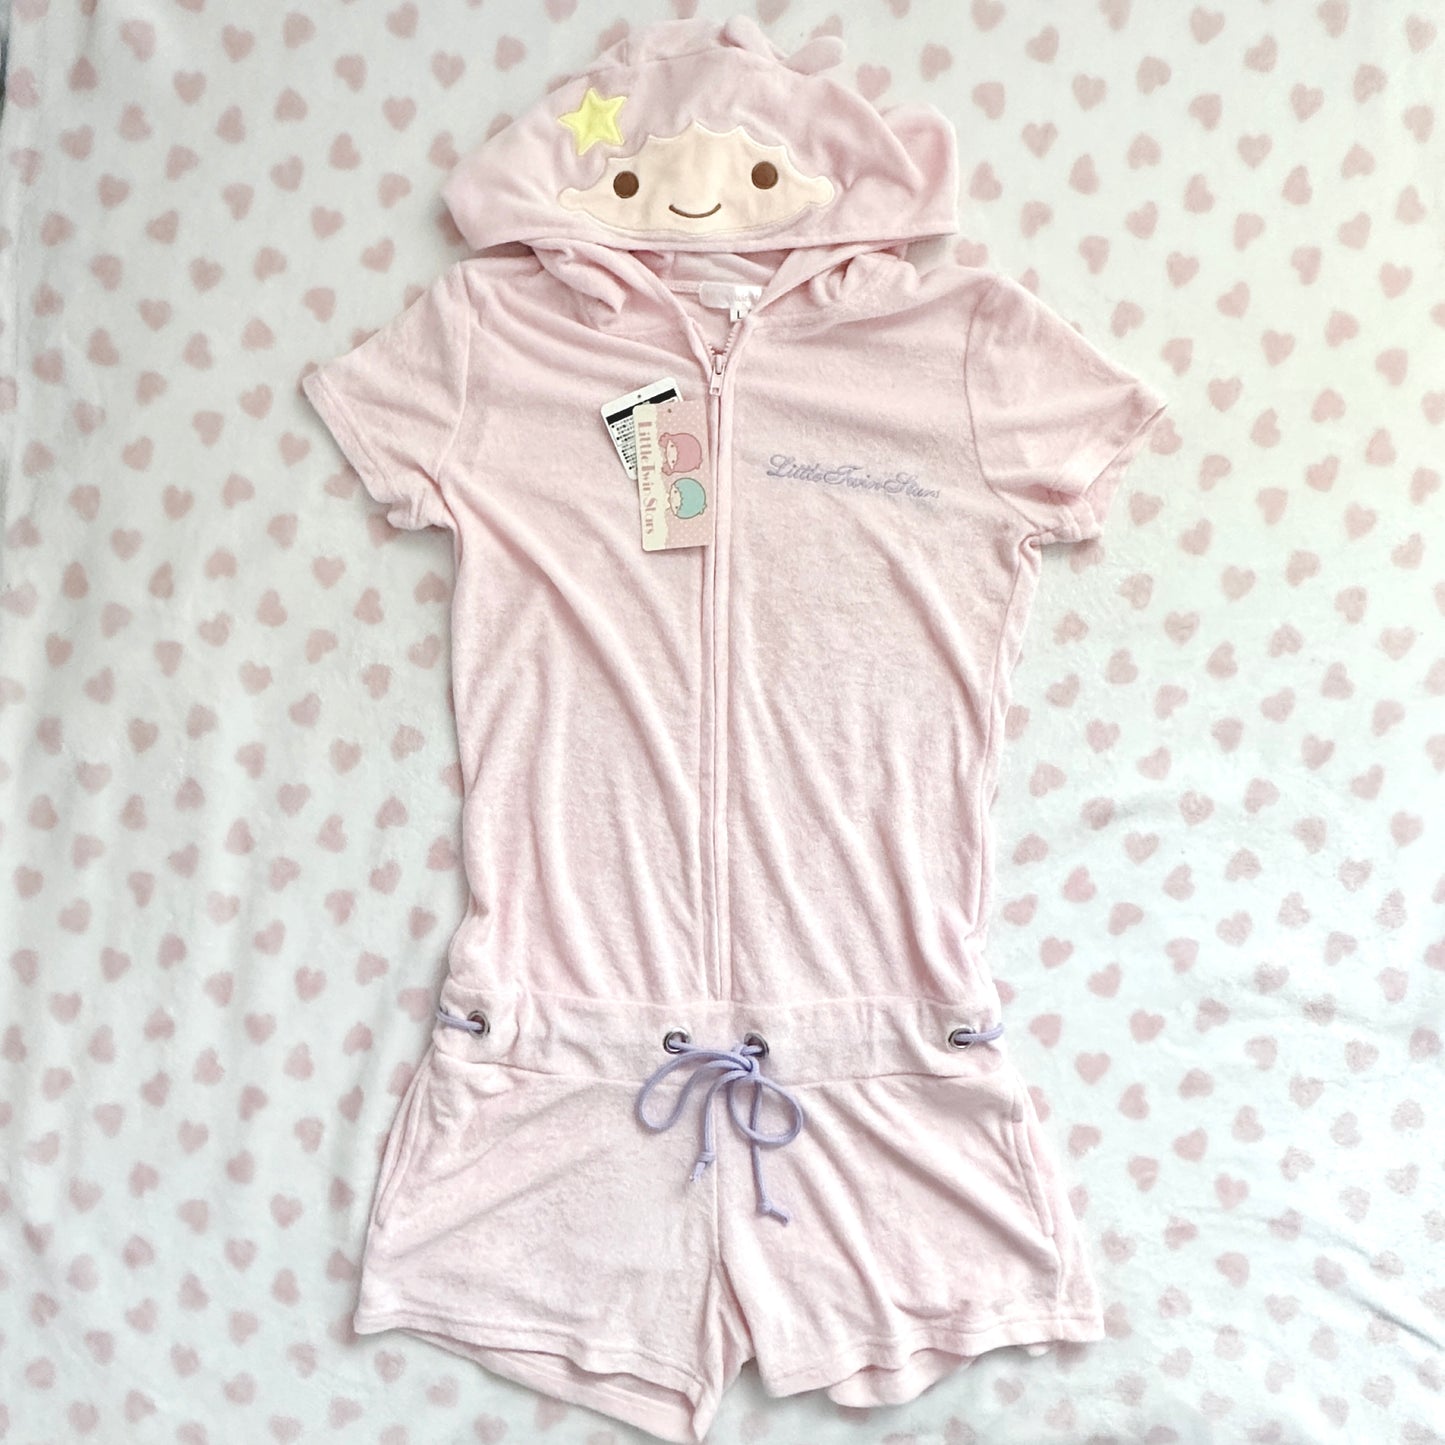 little twin stars one piece pajamas ໒꒰ྀི´͈ ᵕ  `͈ ꒱ྀི১🎀